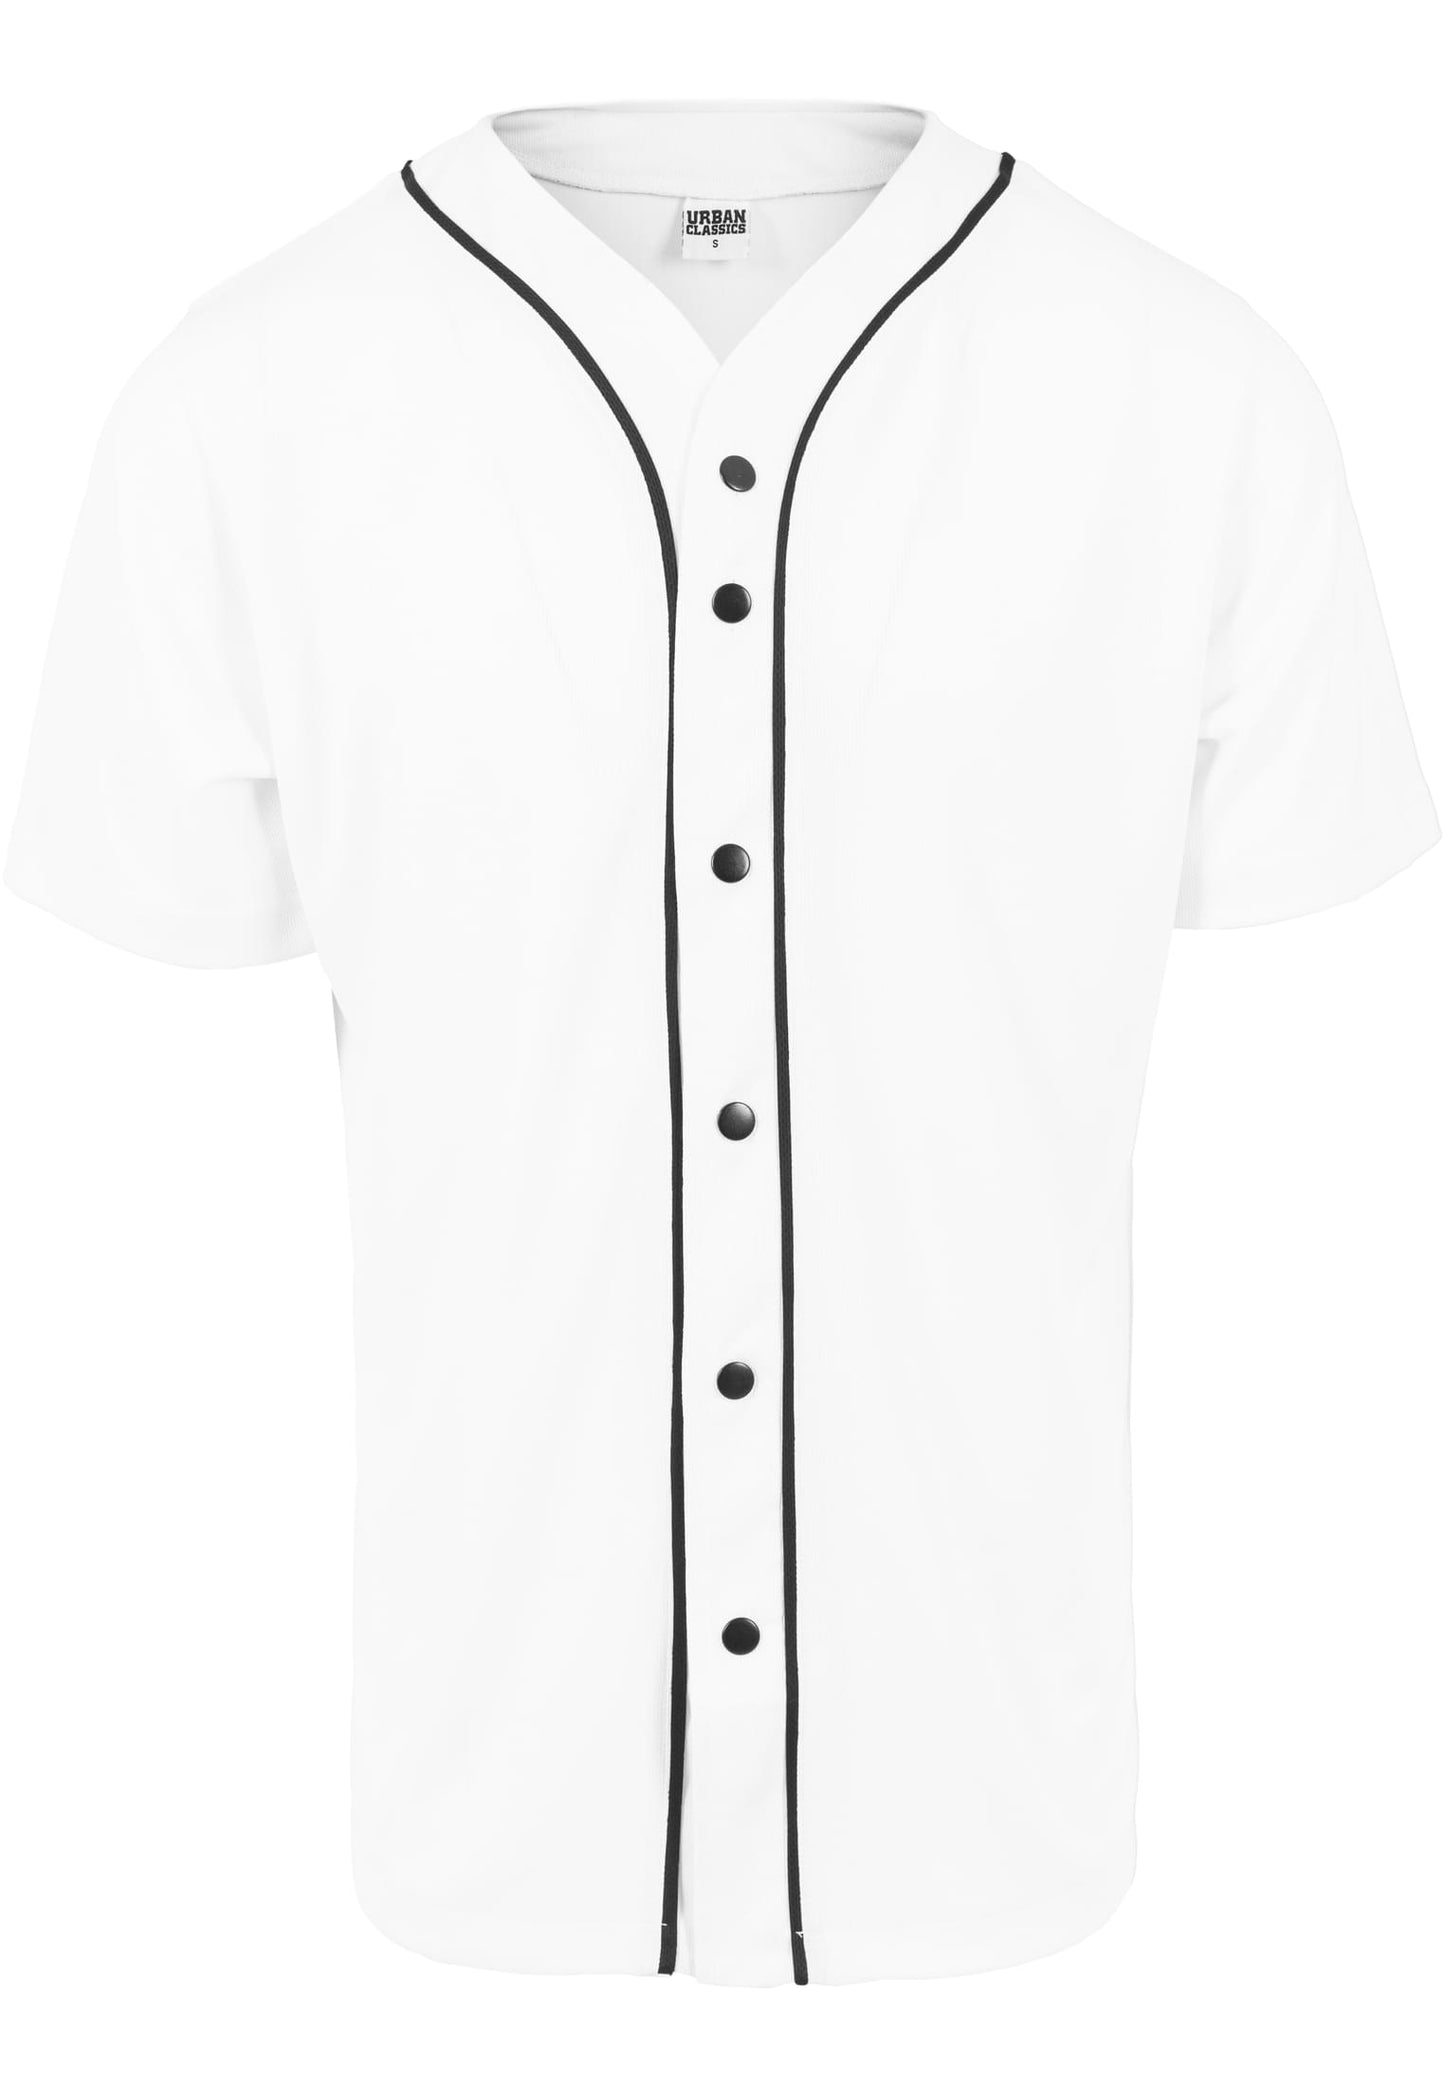 Urban Classics Baseball Mesh Jersey in Weiß